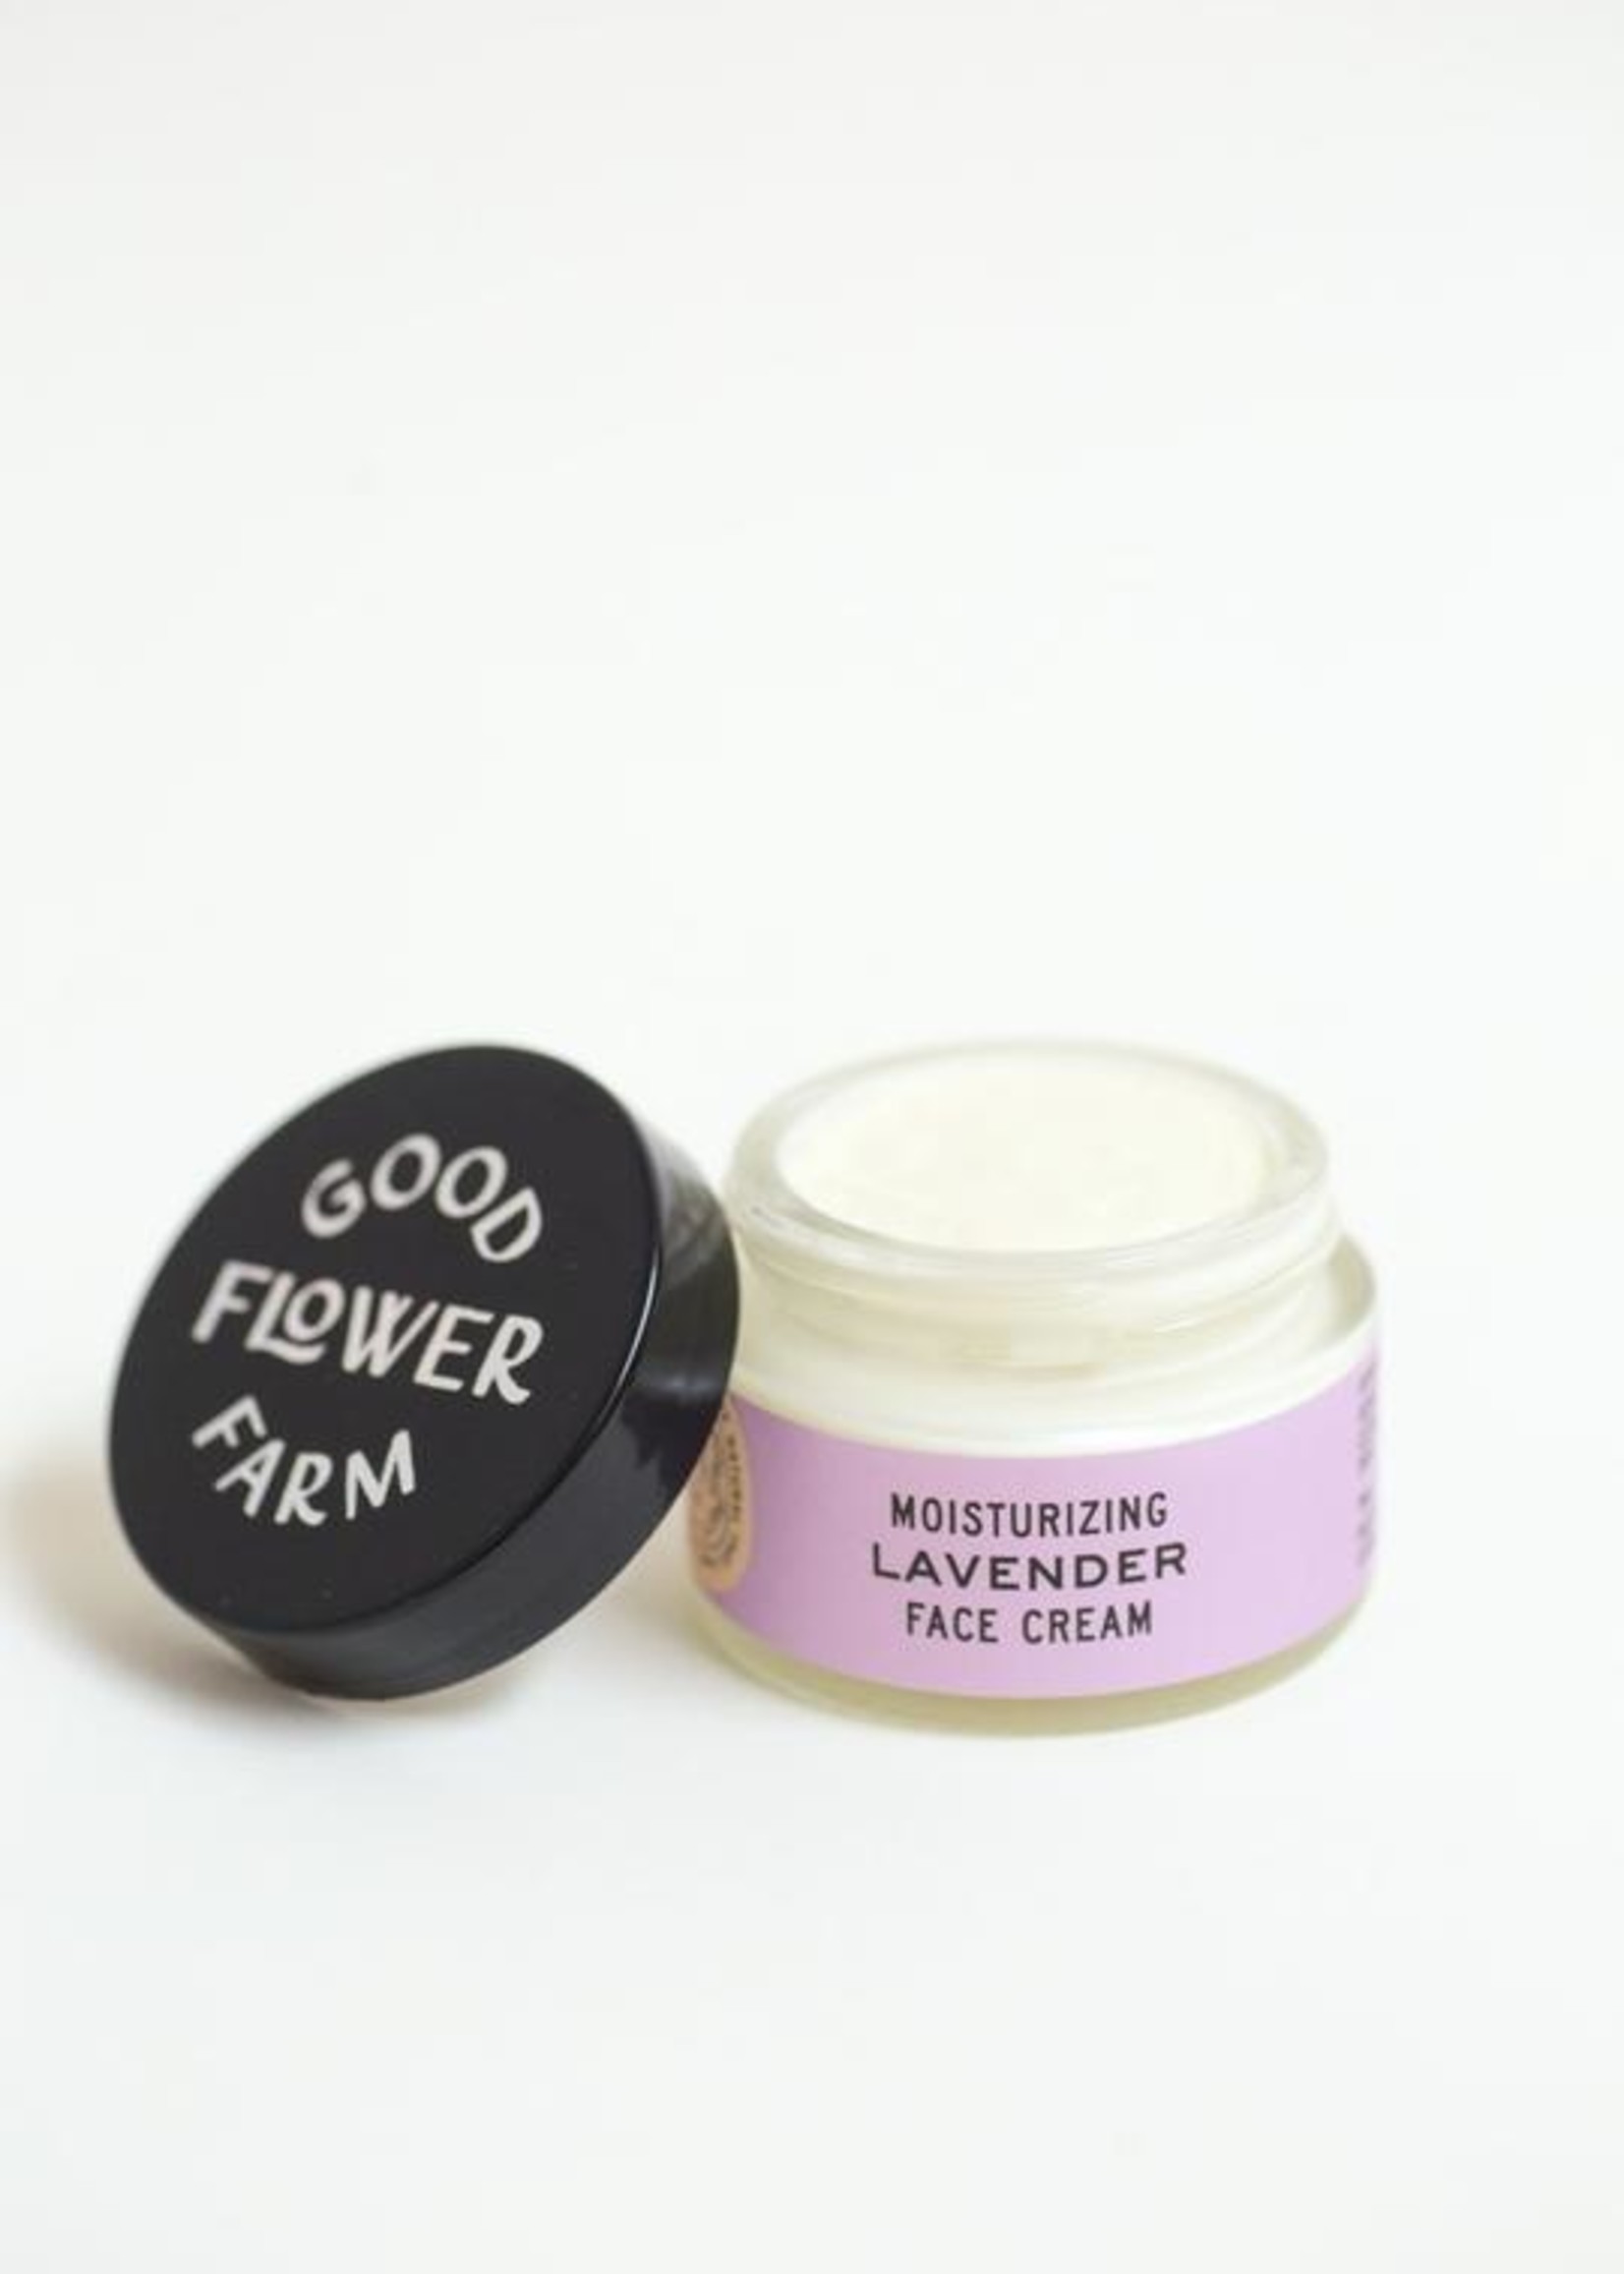 Good Flower Farm Lavender Face Cream